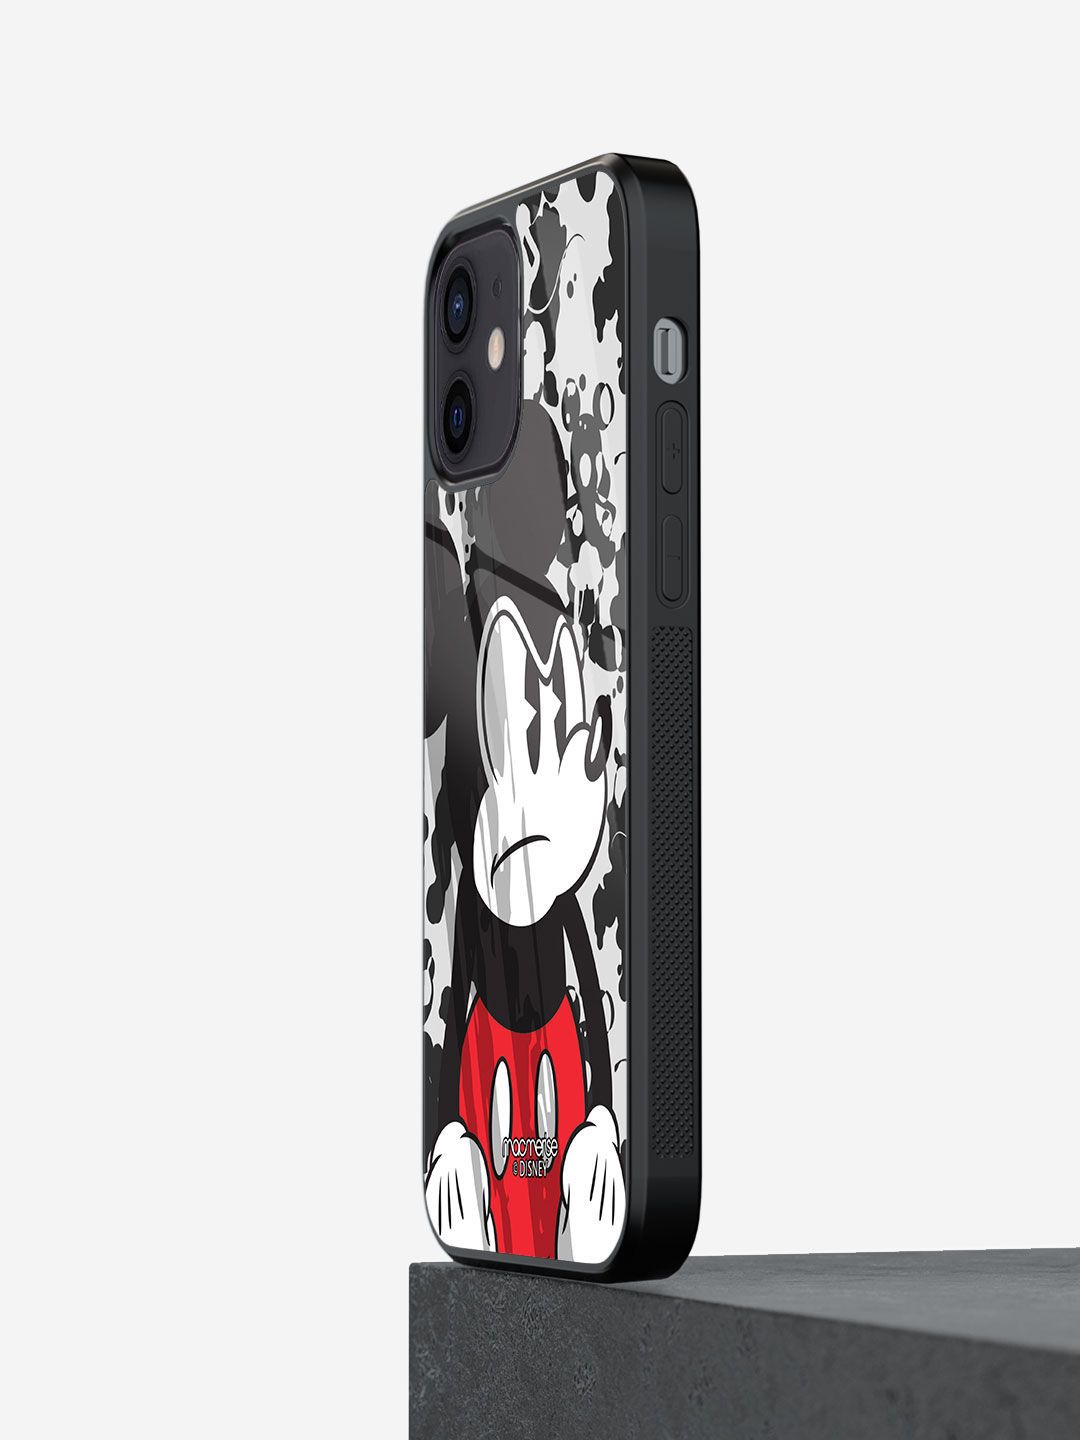 macmerise Black & Red Grumpy Mickey iPhone 12 Mini Mobile Phone Case Price in India